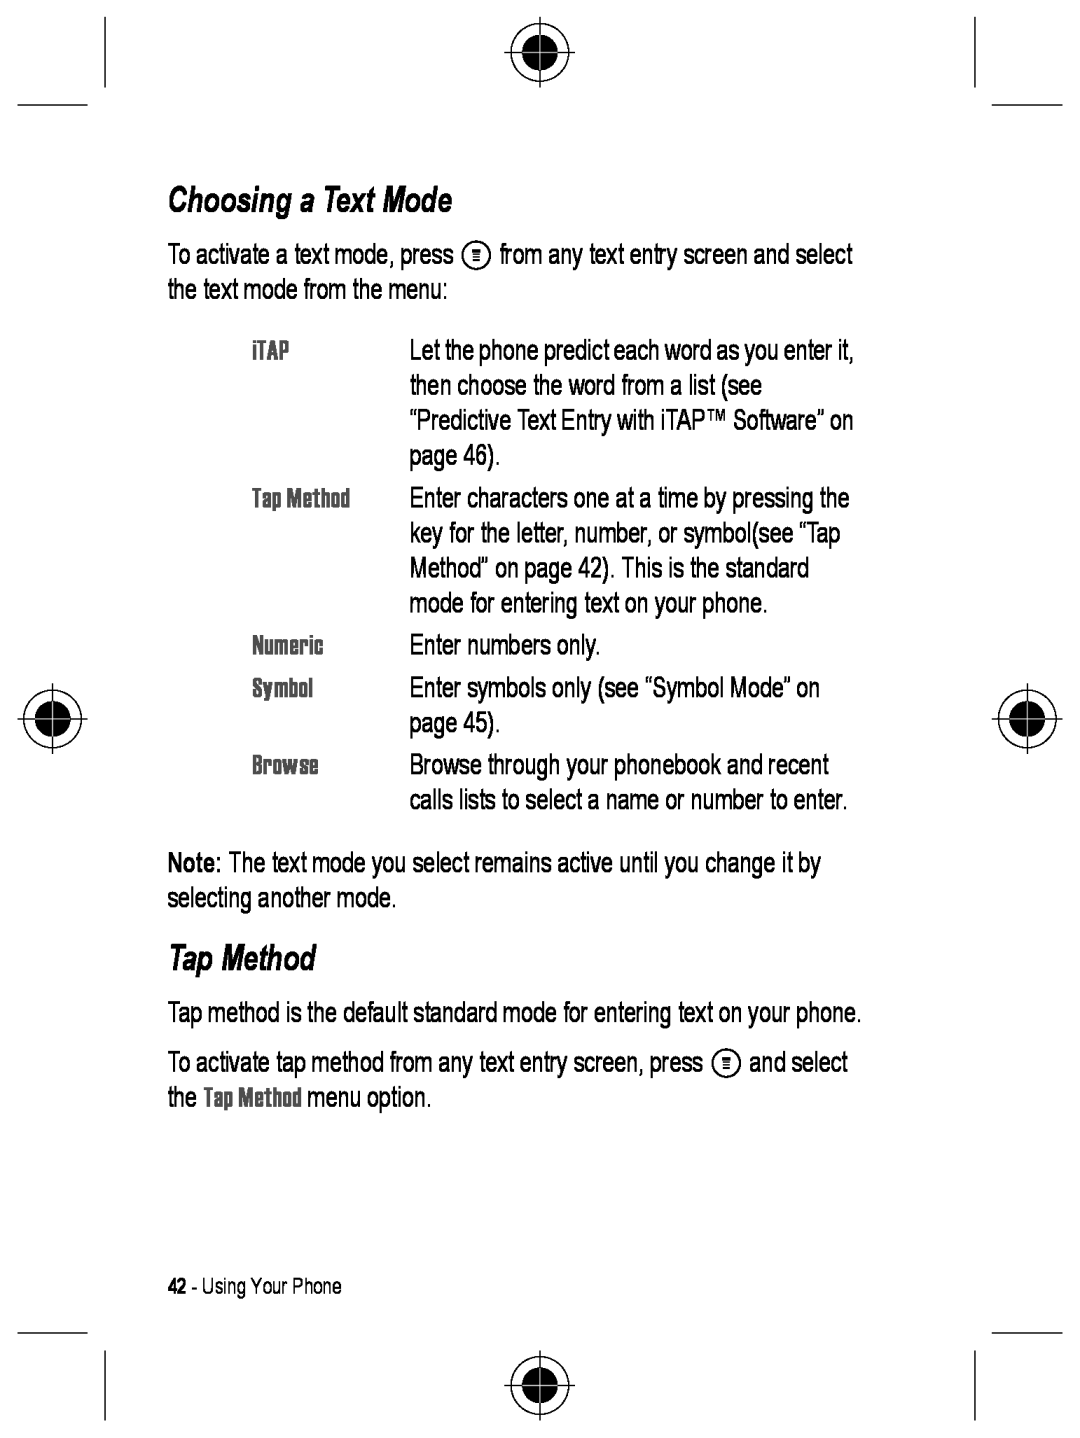 Motorola C330 manual Choosing a Text Mode, Tap Method, iTAP, Numeric, Symbol, Browse 